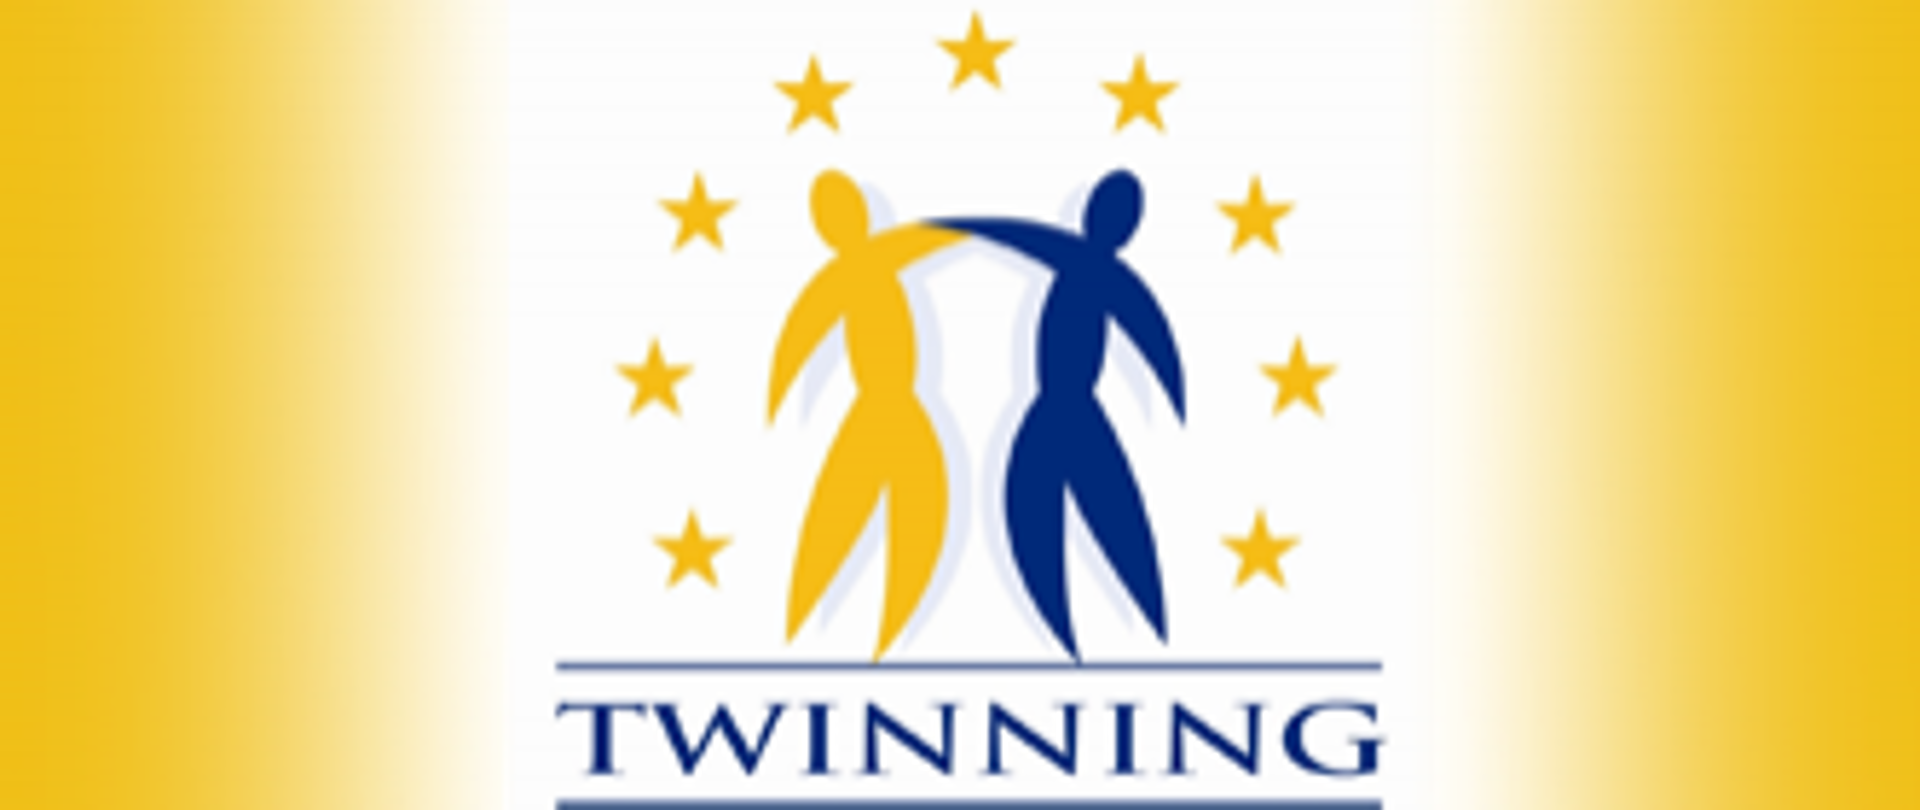 twinning_banner-2